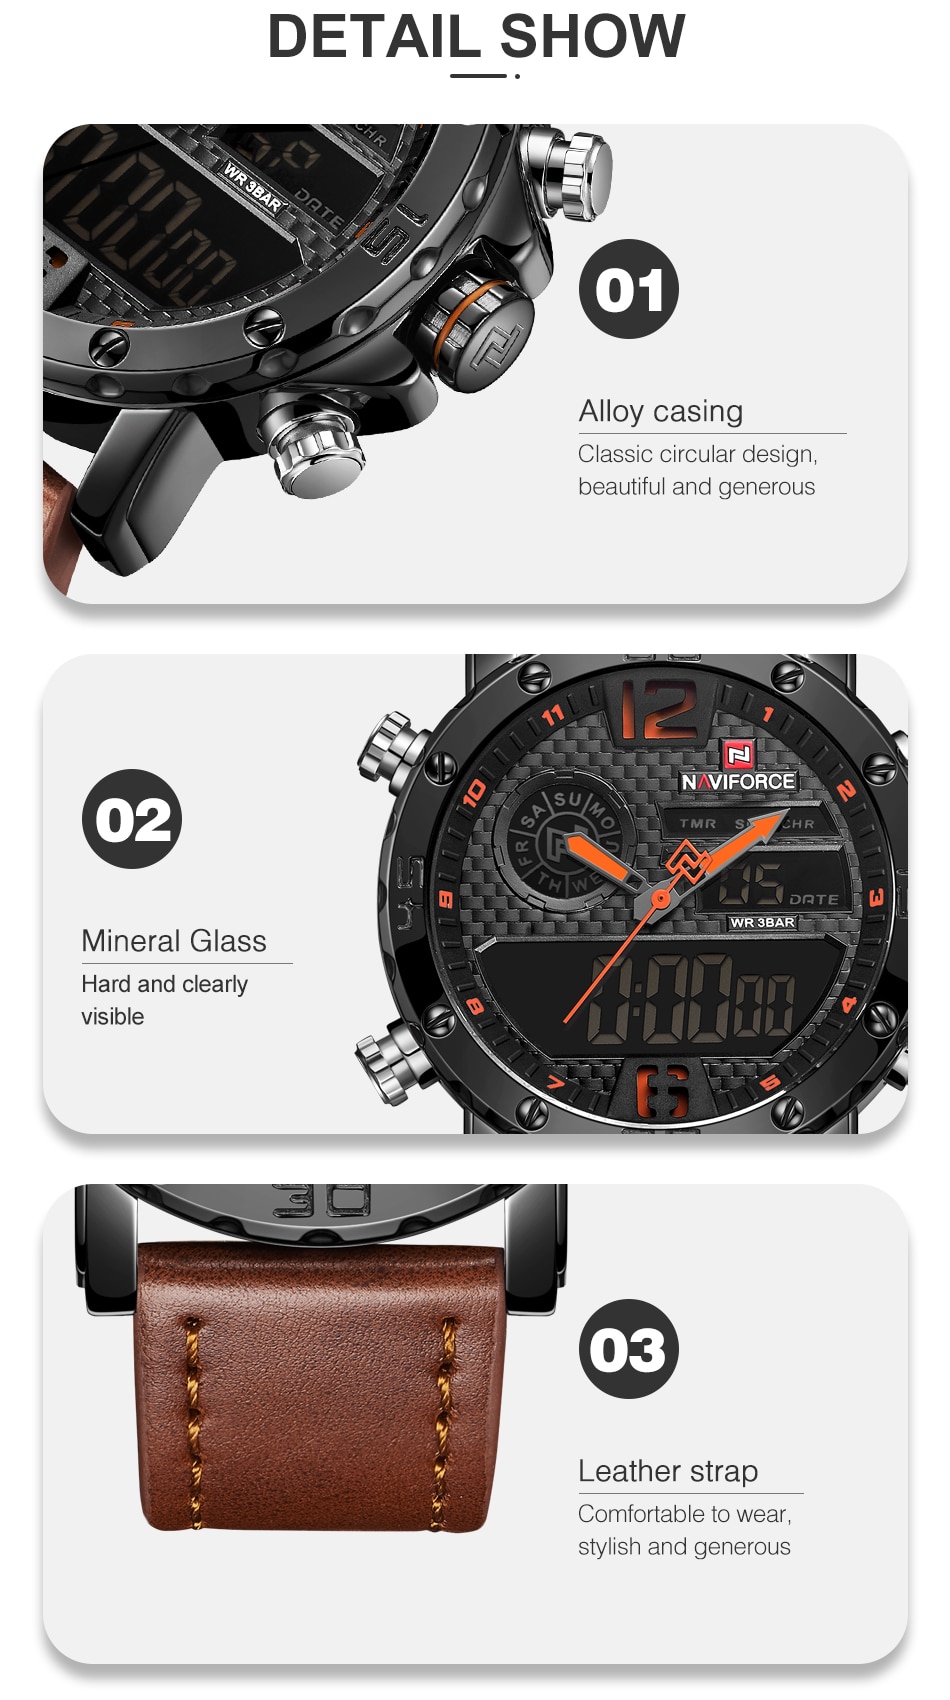 Mens Watches To Luxury Brand Men Leather Sports Watches NAVIFORCE Men's Quartz LED Digital Clock Waterproof Military Wrist Watch